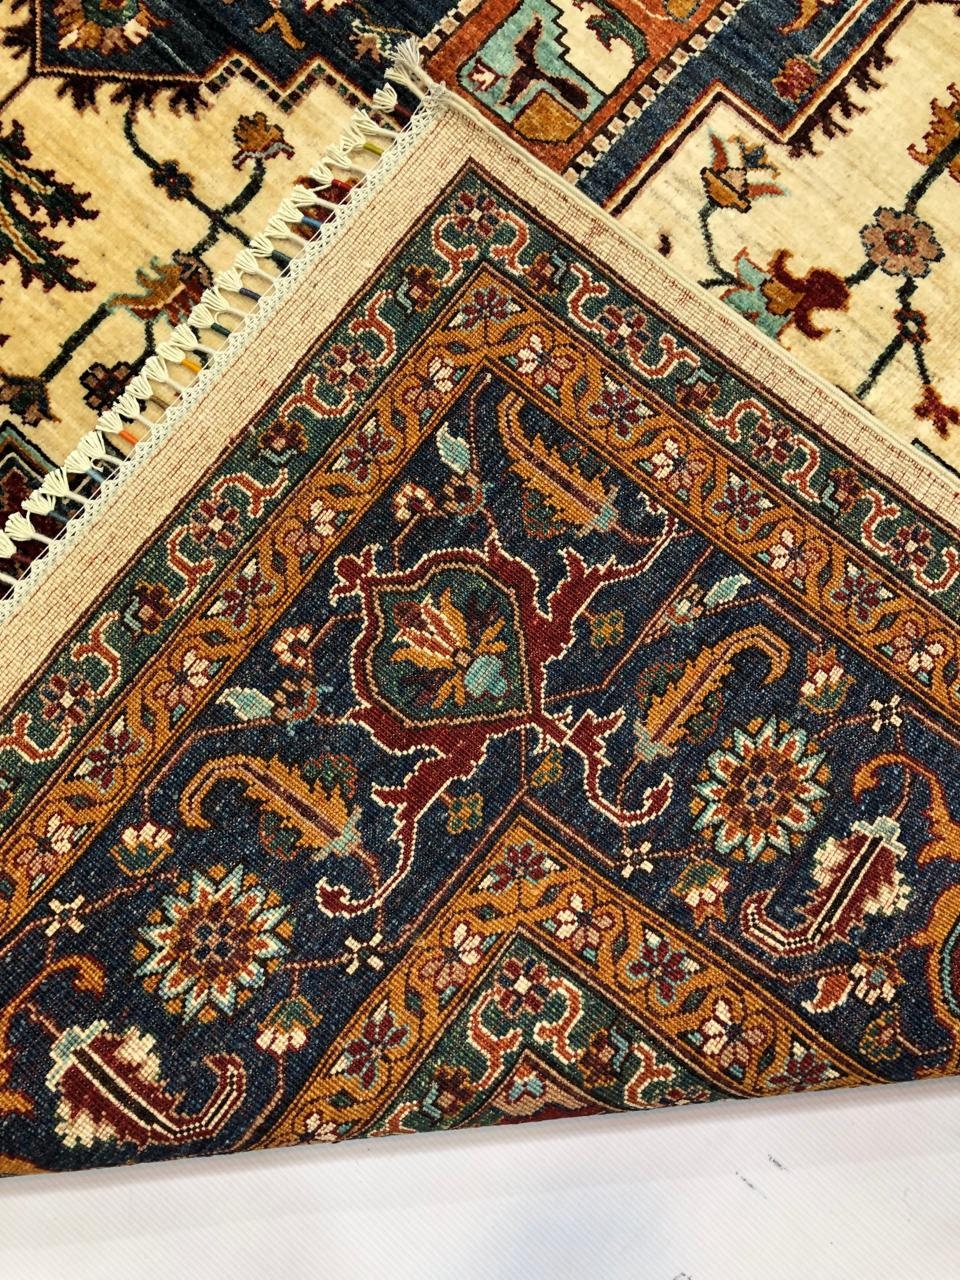 10x8 Feet Top Quality Mamluk Handmade Afghan Rug, Persian Designed from Tribal Ghazni | Living room Carpet, Neon Colored